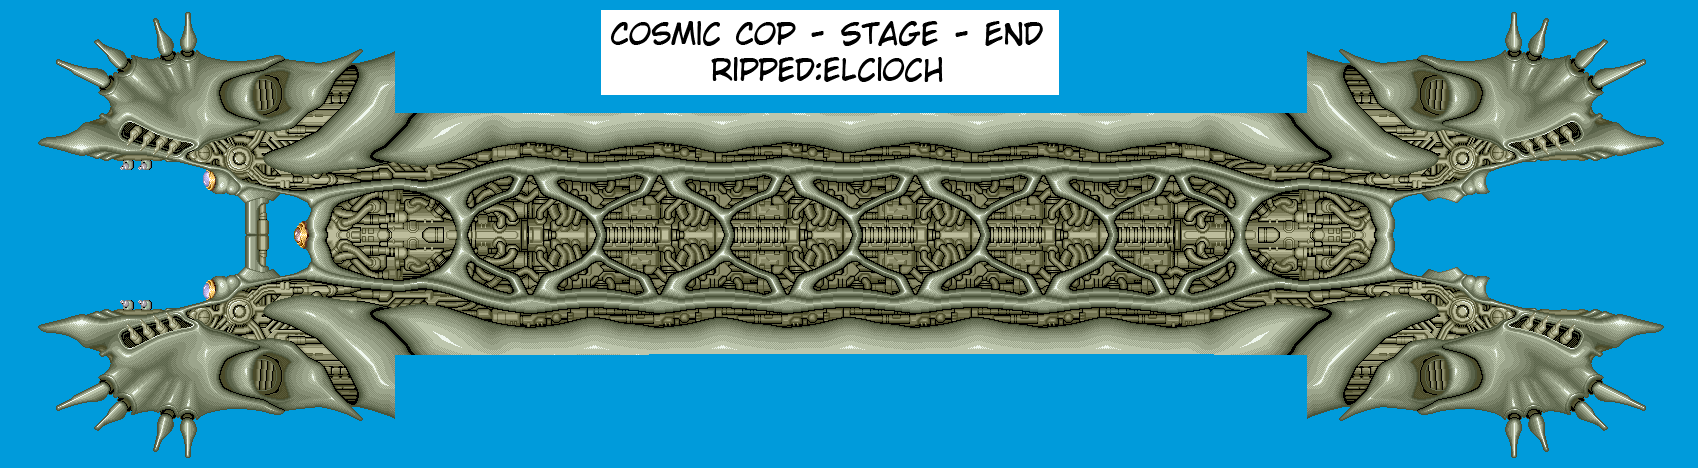 Cosmic Cop - Last Stage